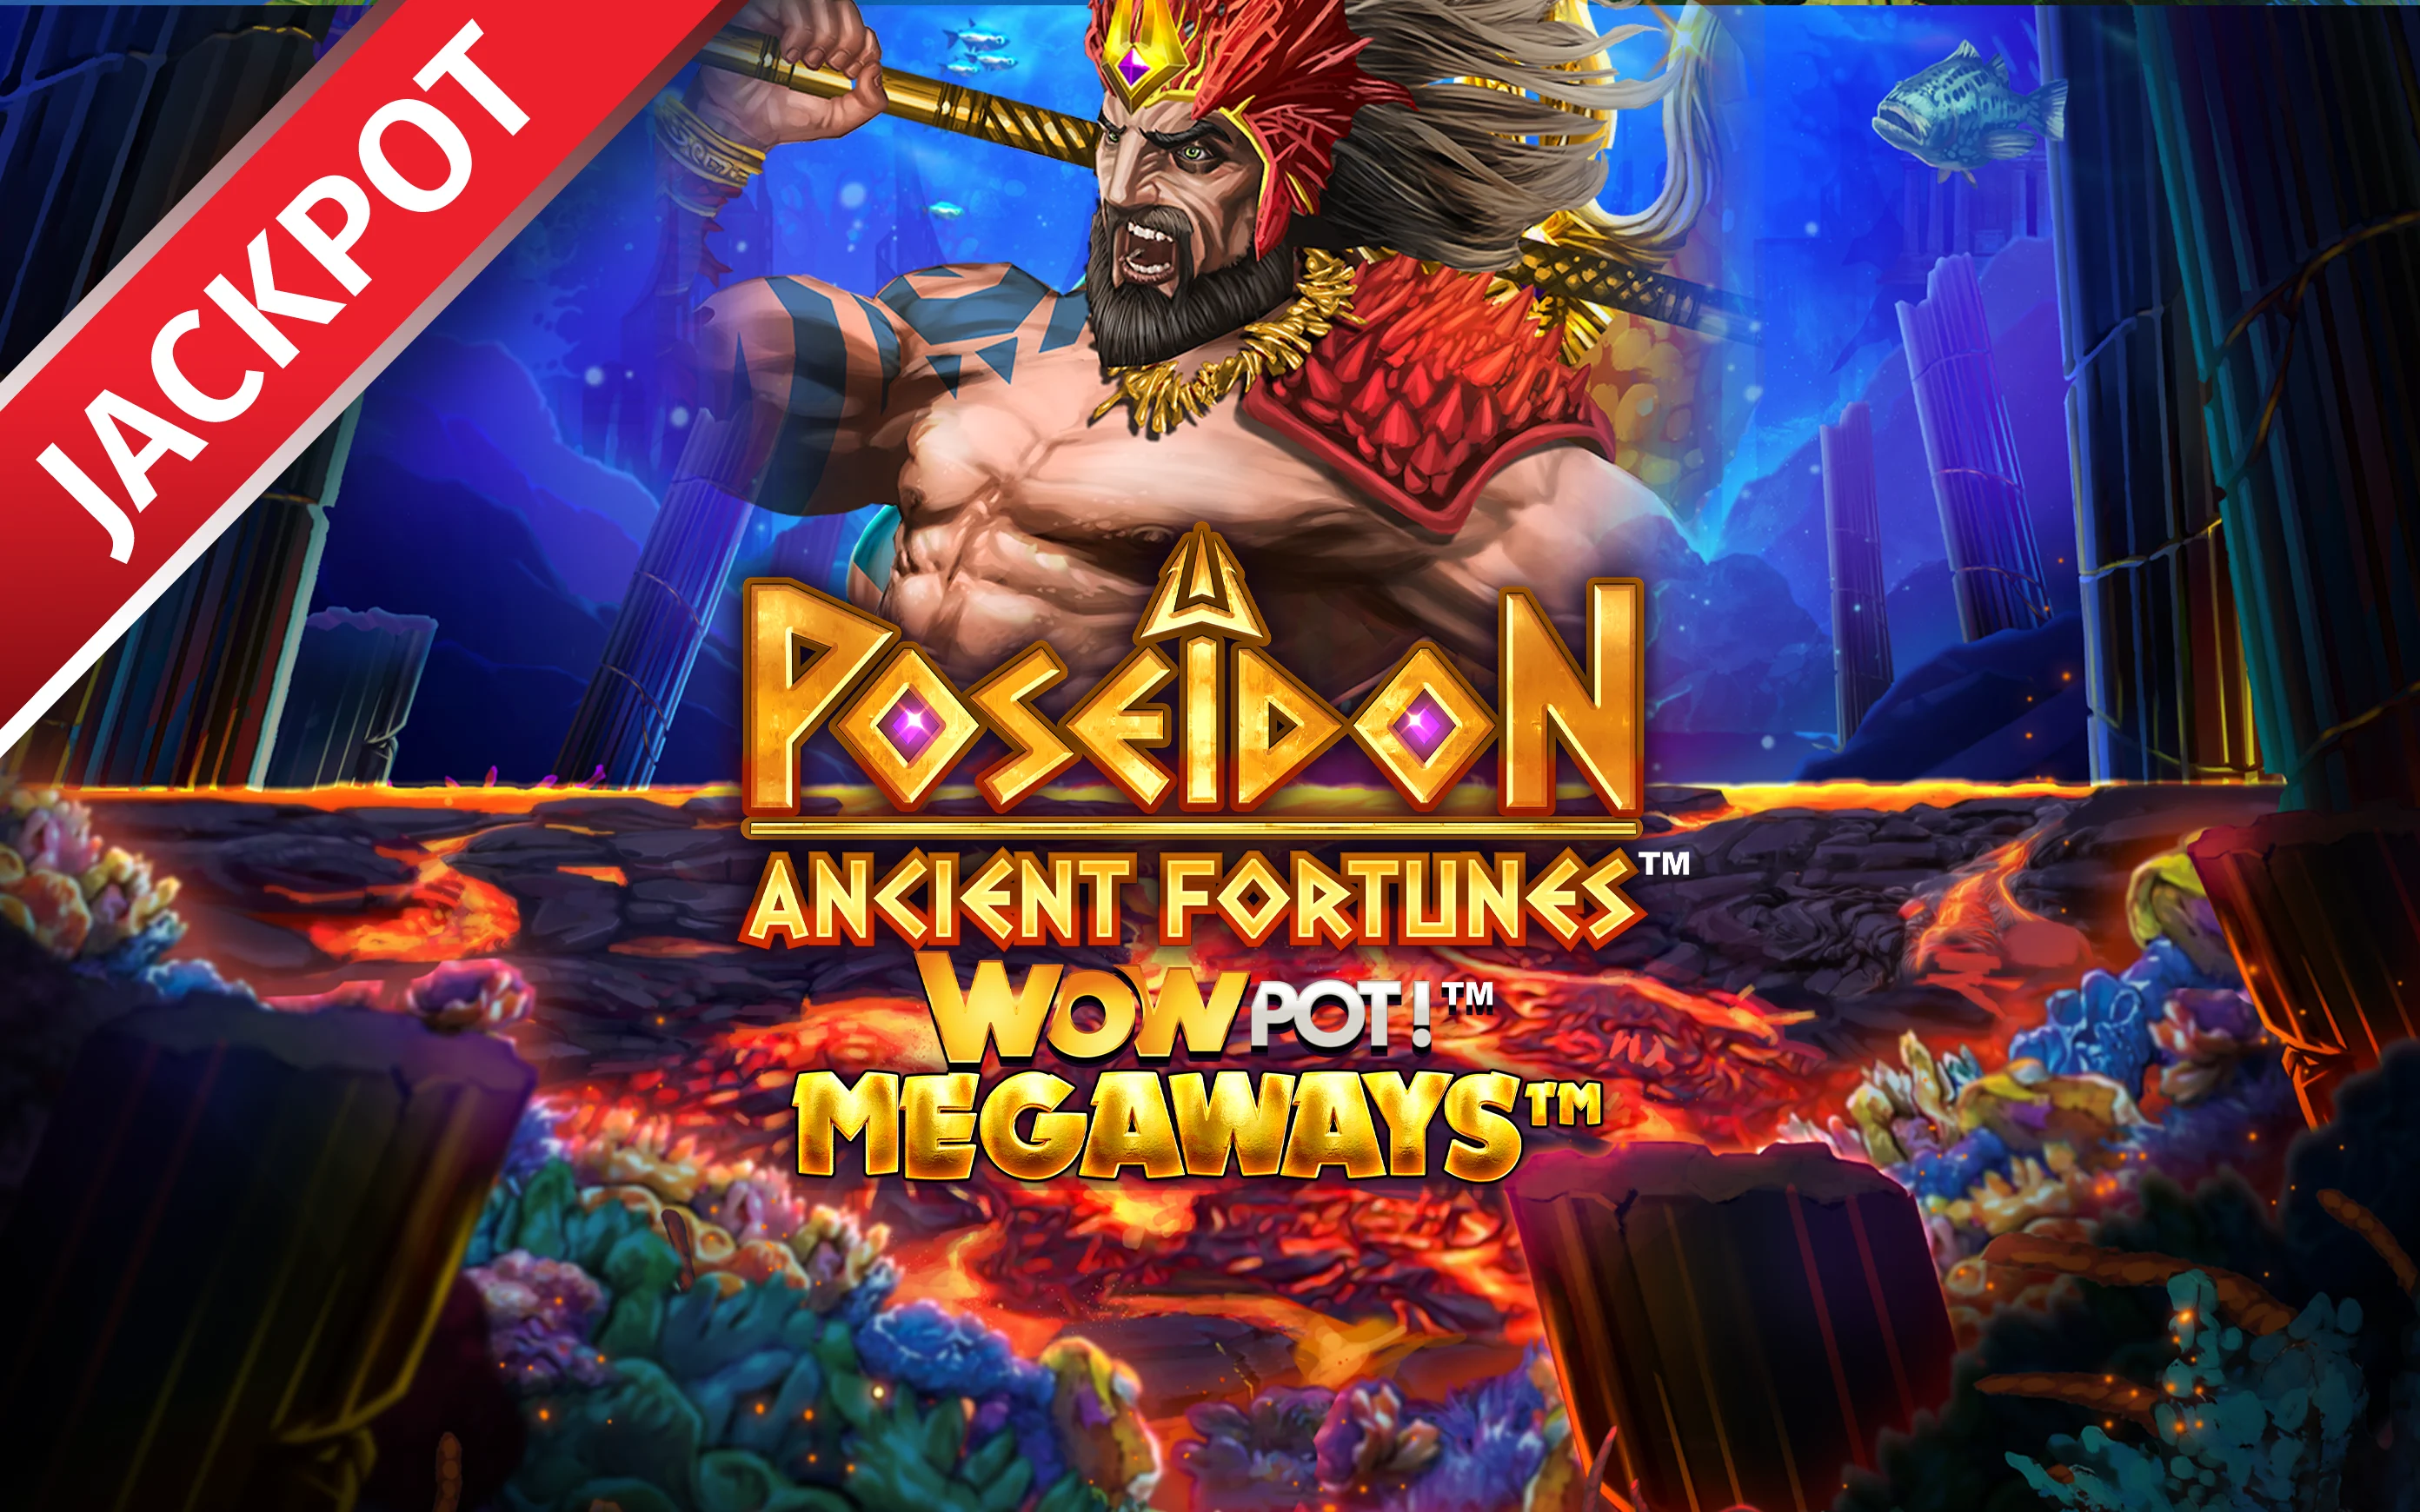 Gioca a Ancient Fortunes: Poseidon™ WowPot! MEGAWAYS™ sul casino online Starcasino.be